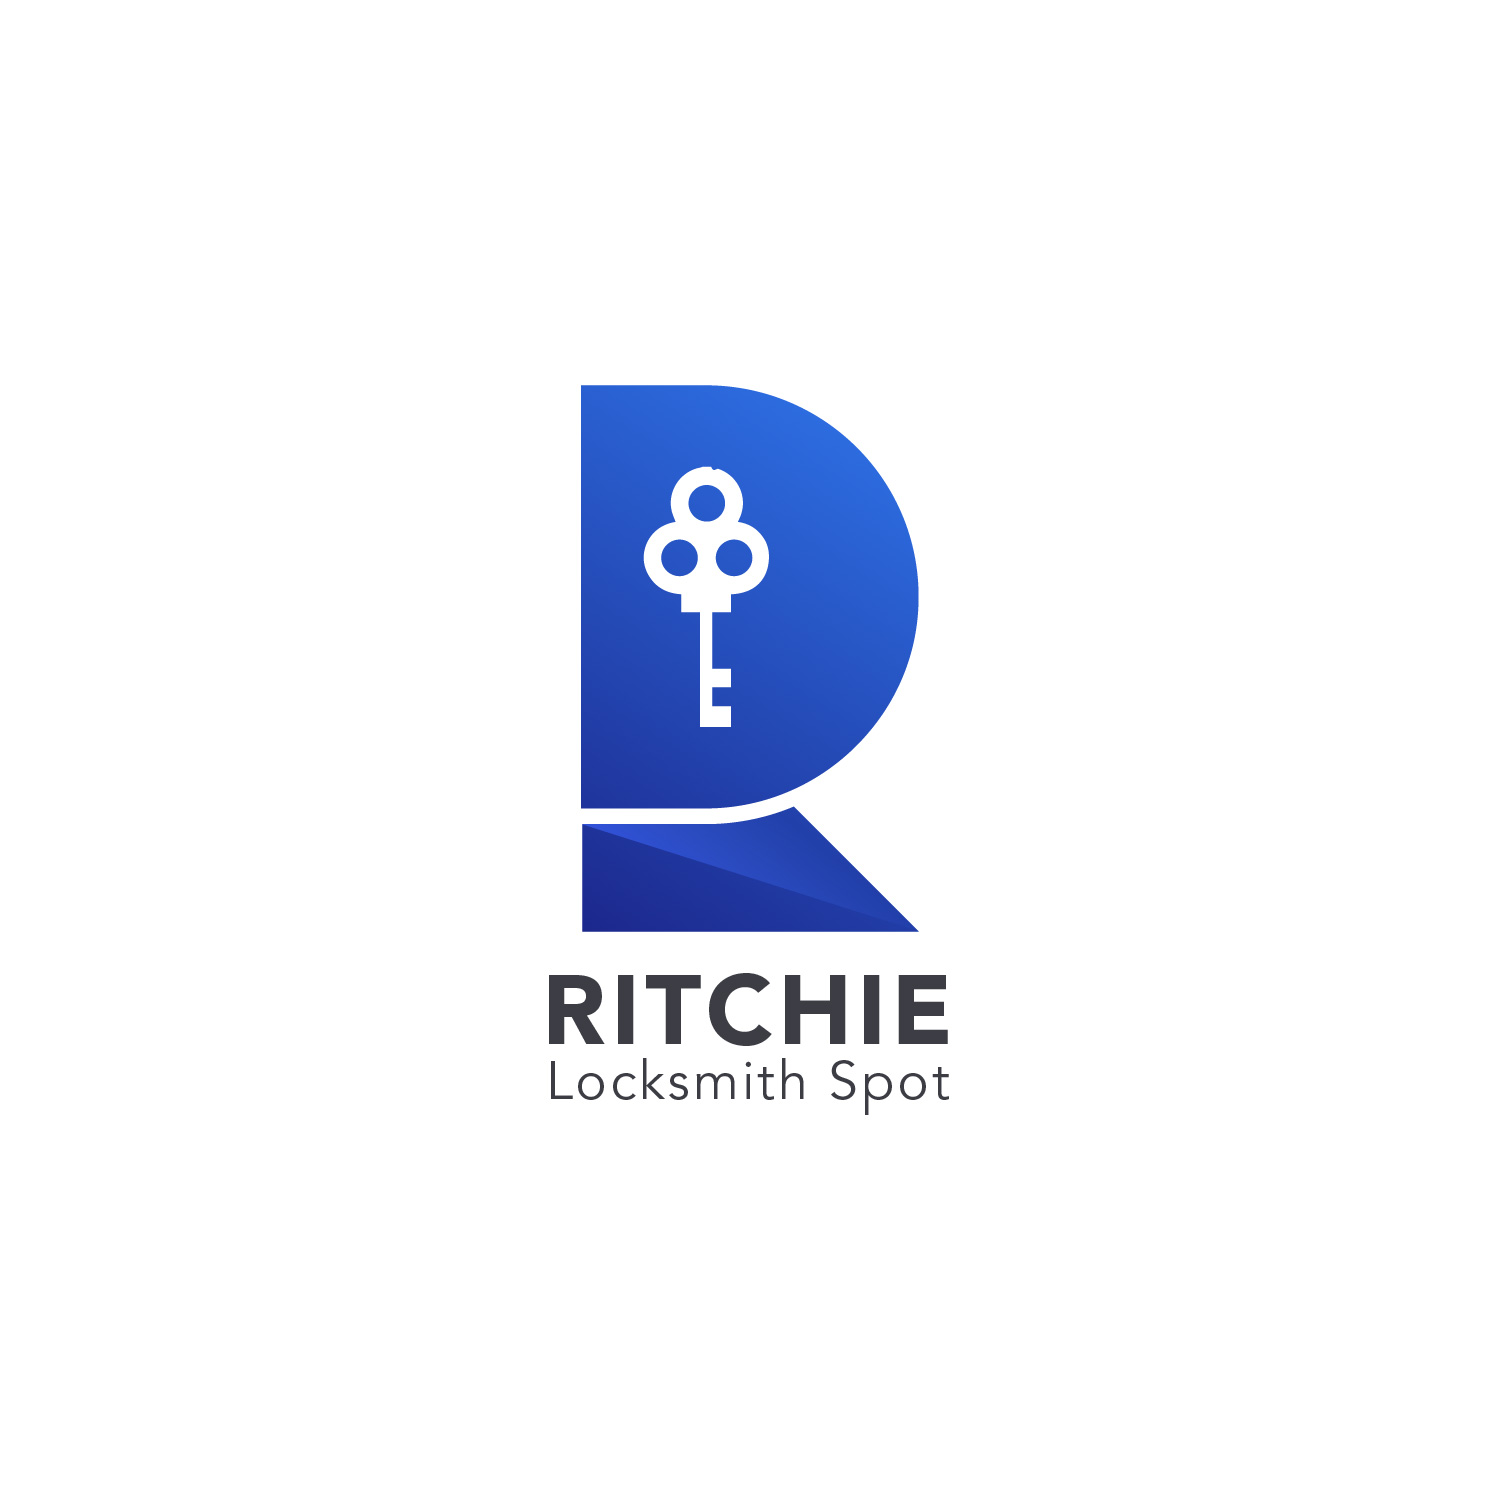 Ritchie Locksmith Spot